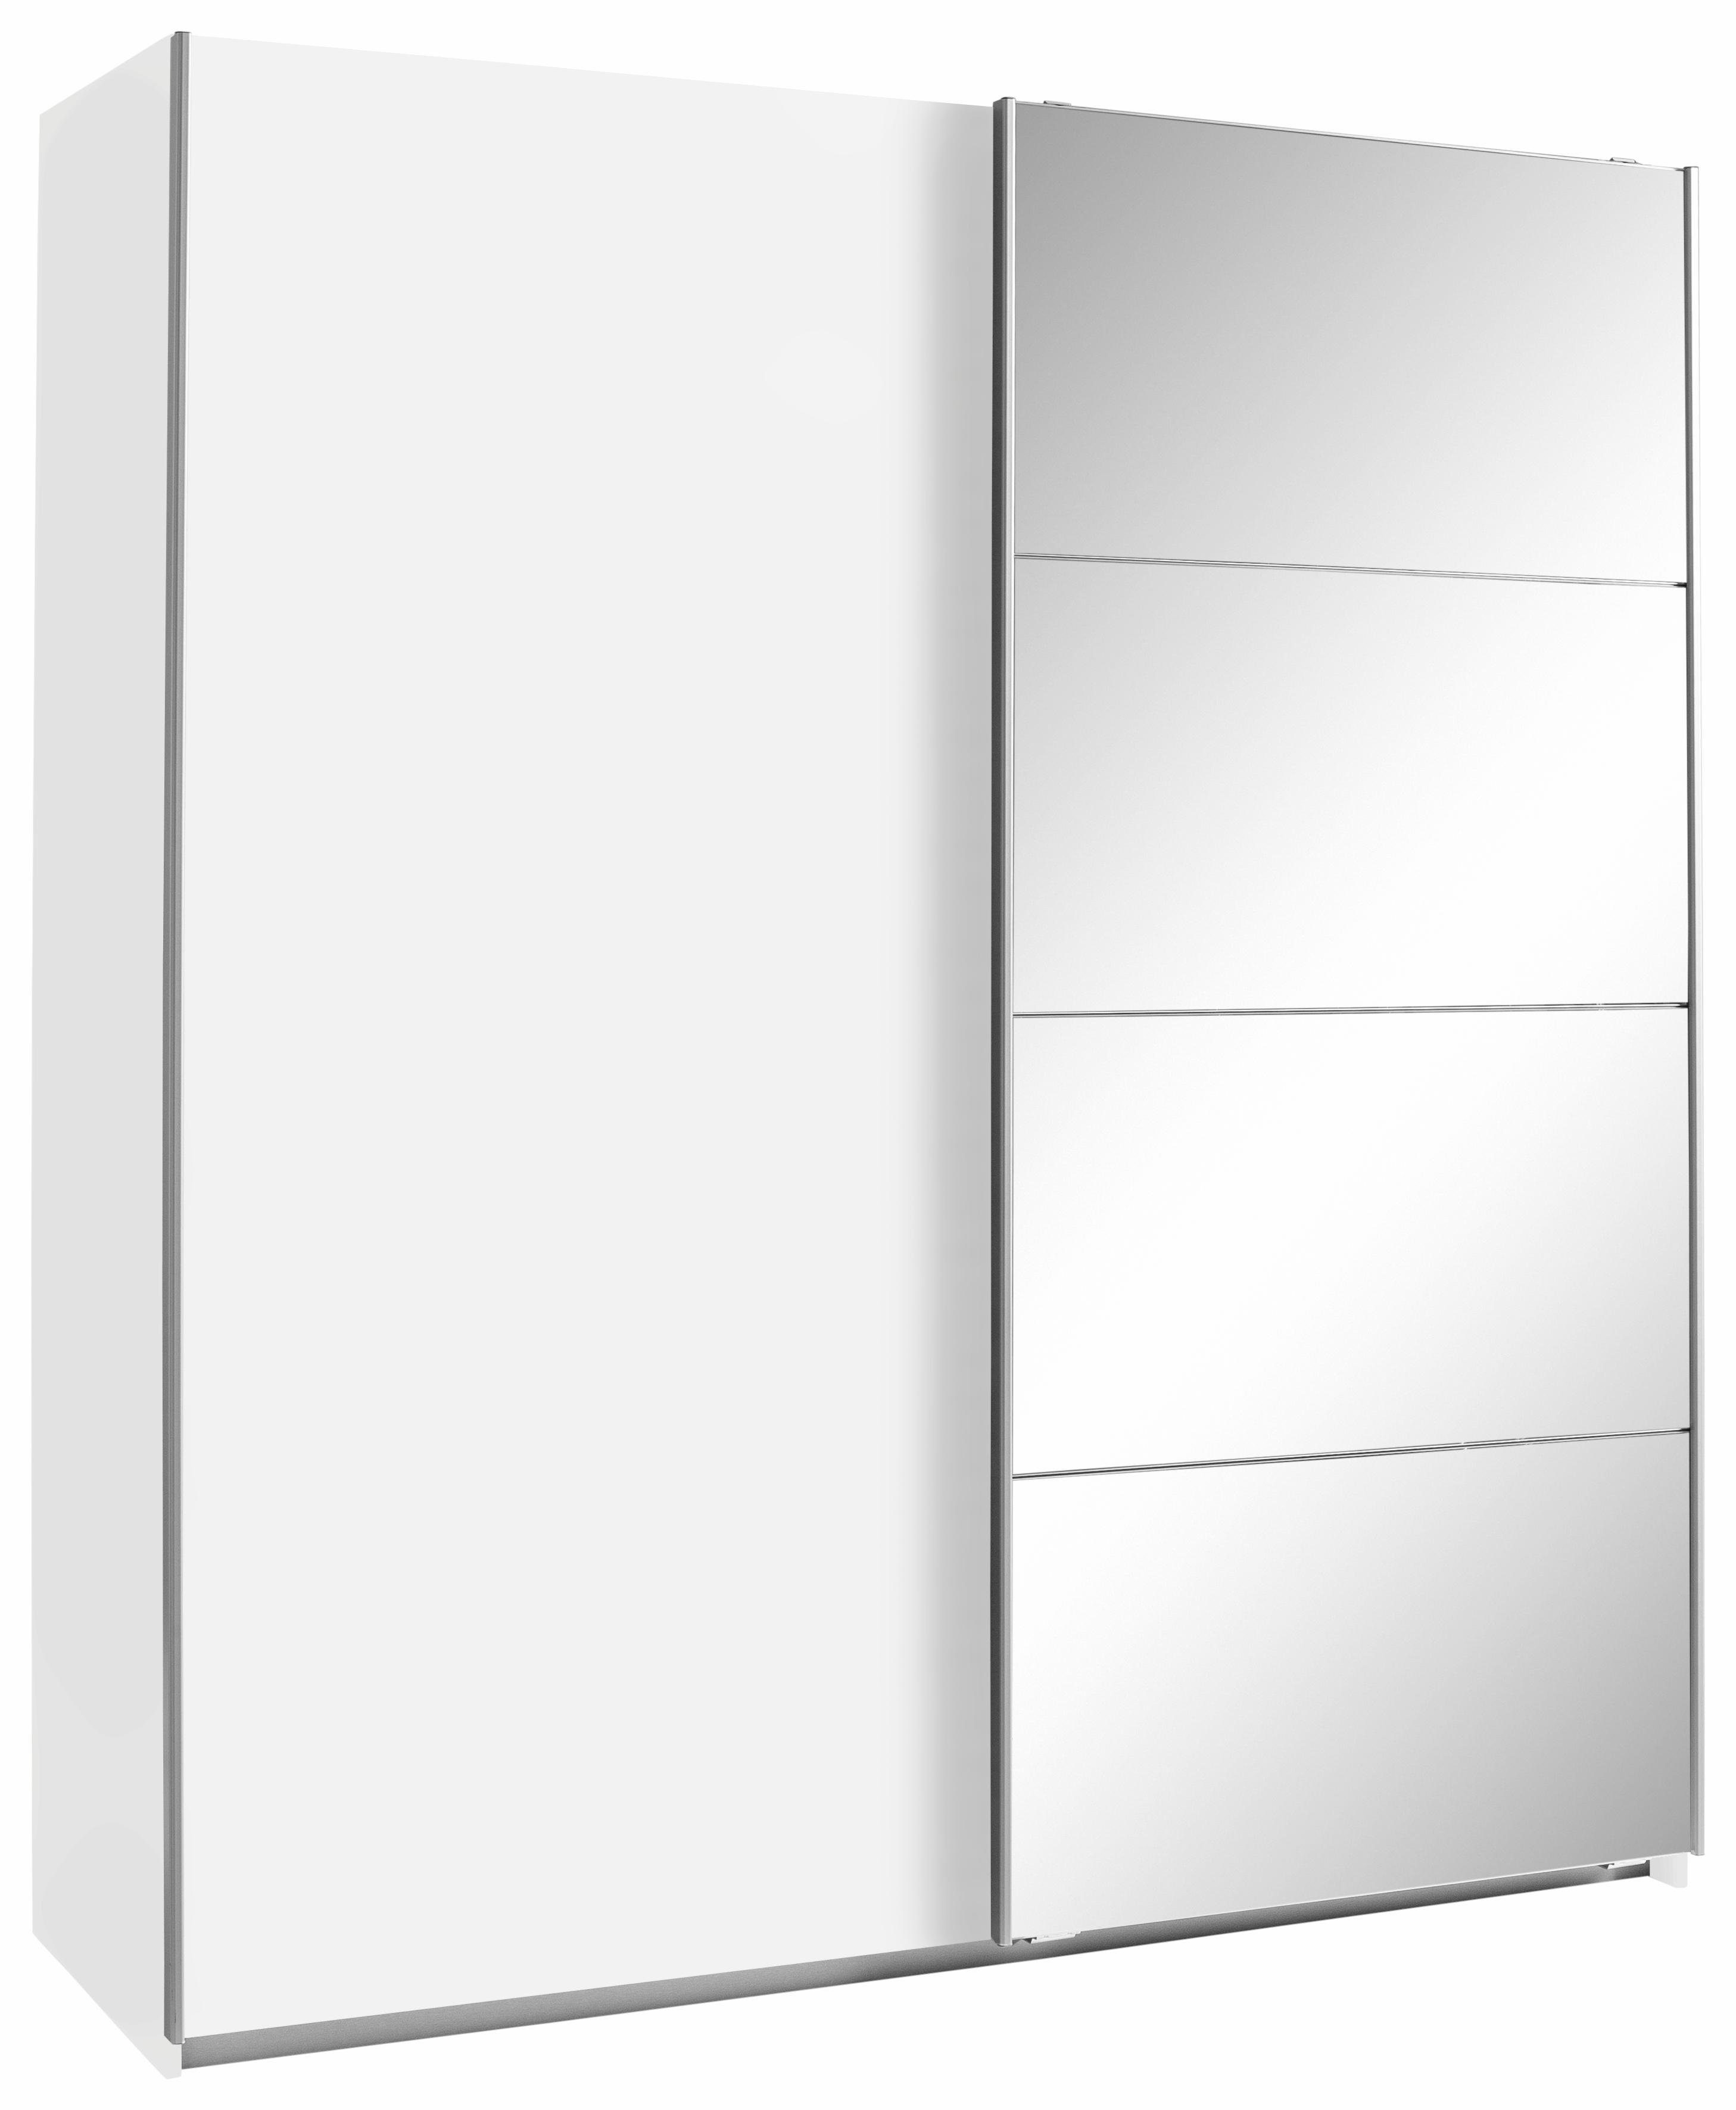 rauch kledingkast minosa met spiegel, breedte 181 cm wit